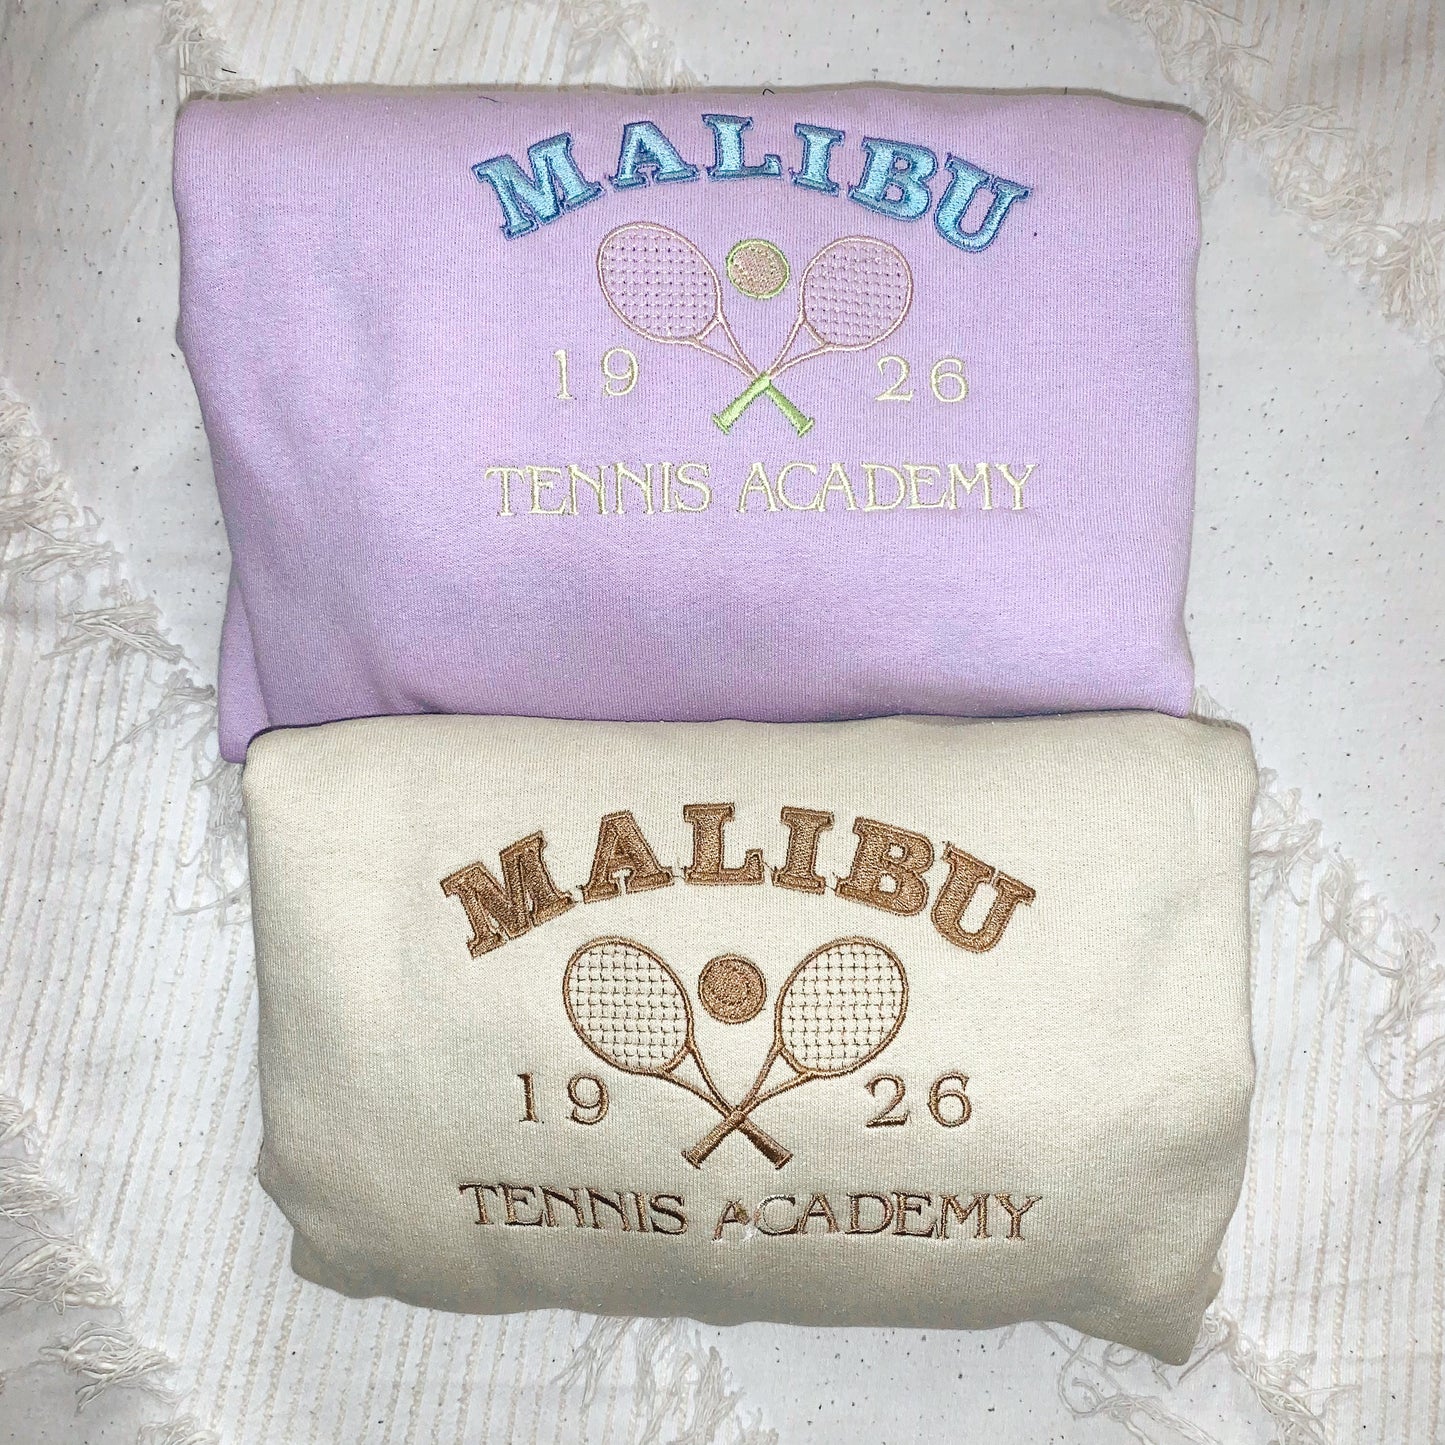 Malibu Tennis